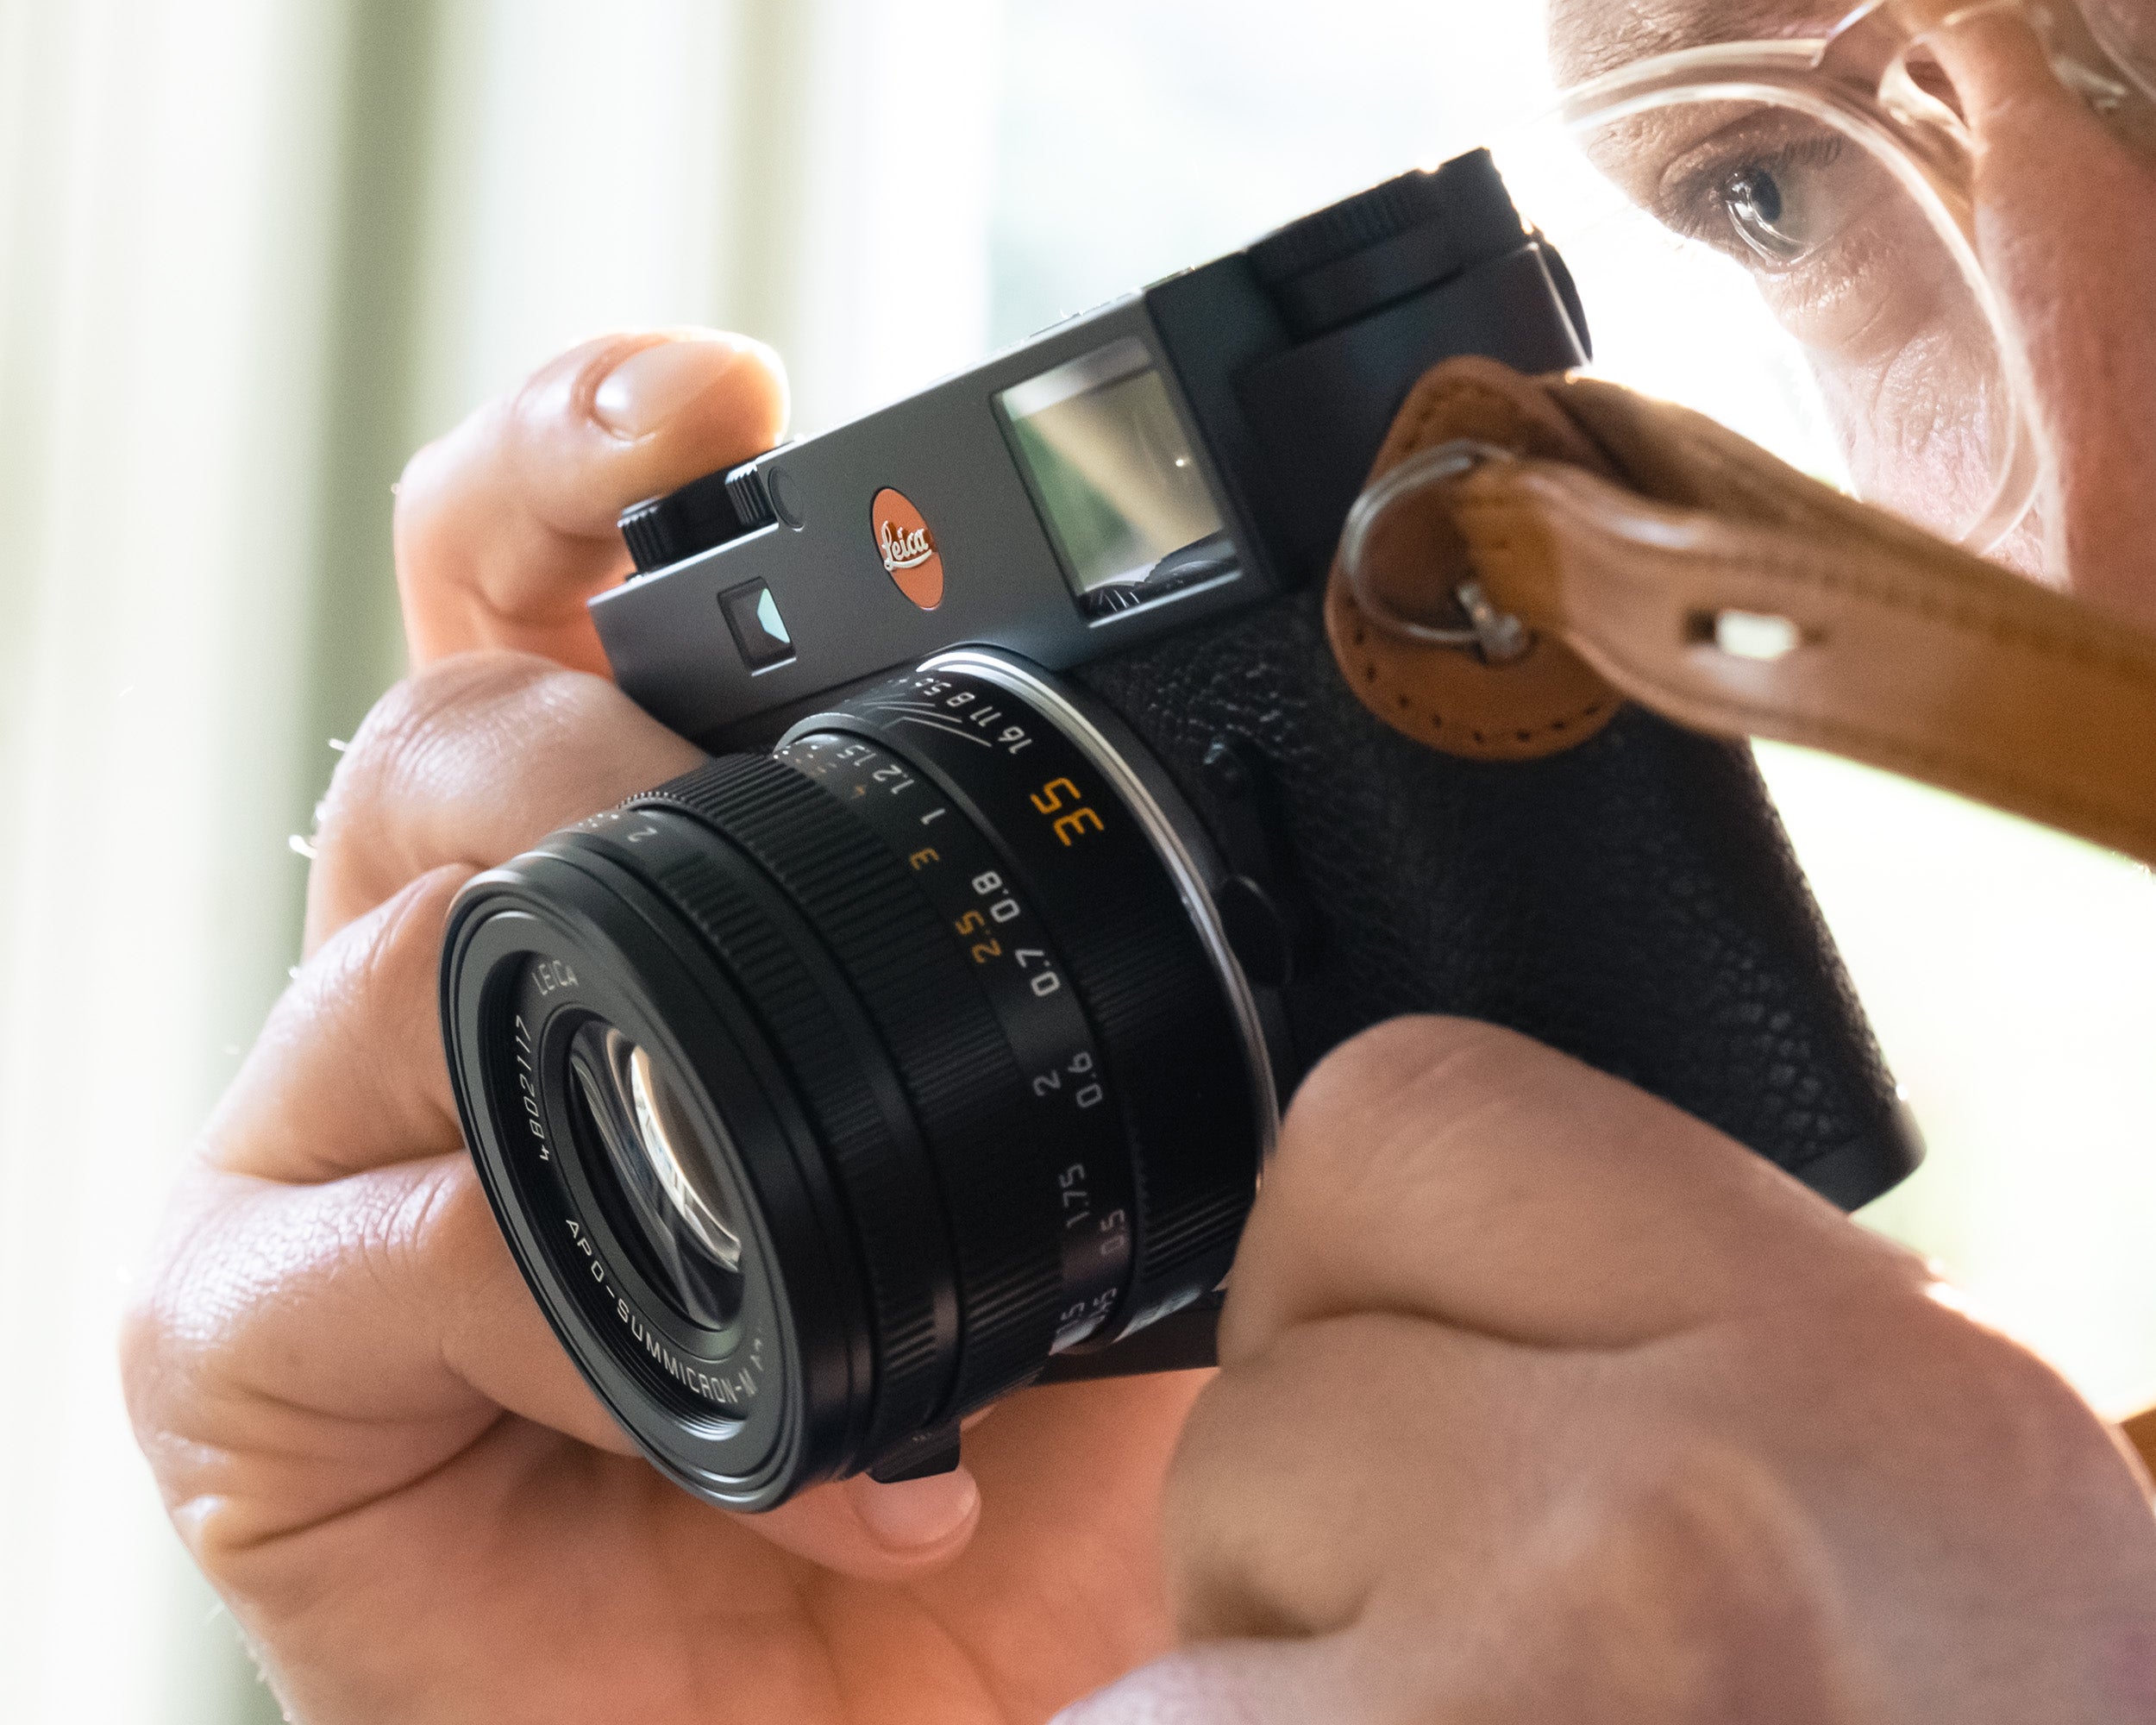 Leica M11 rangefinder camera held up to an eye